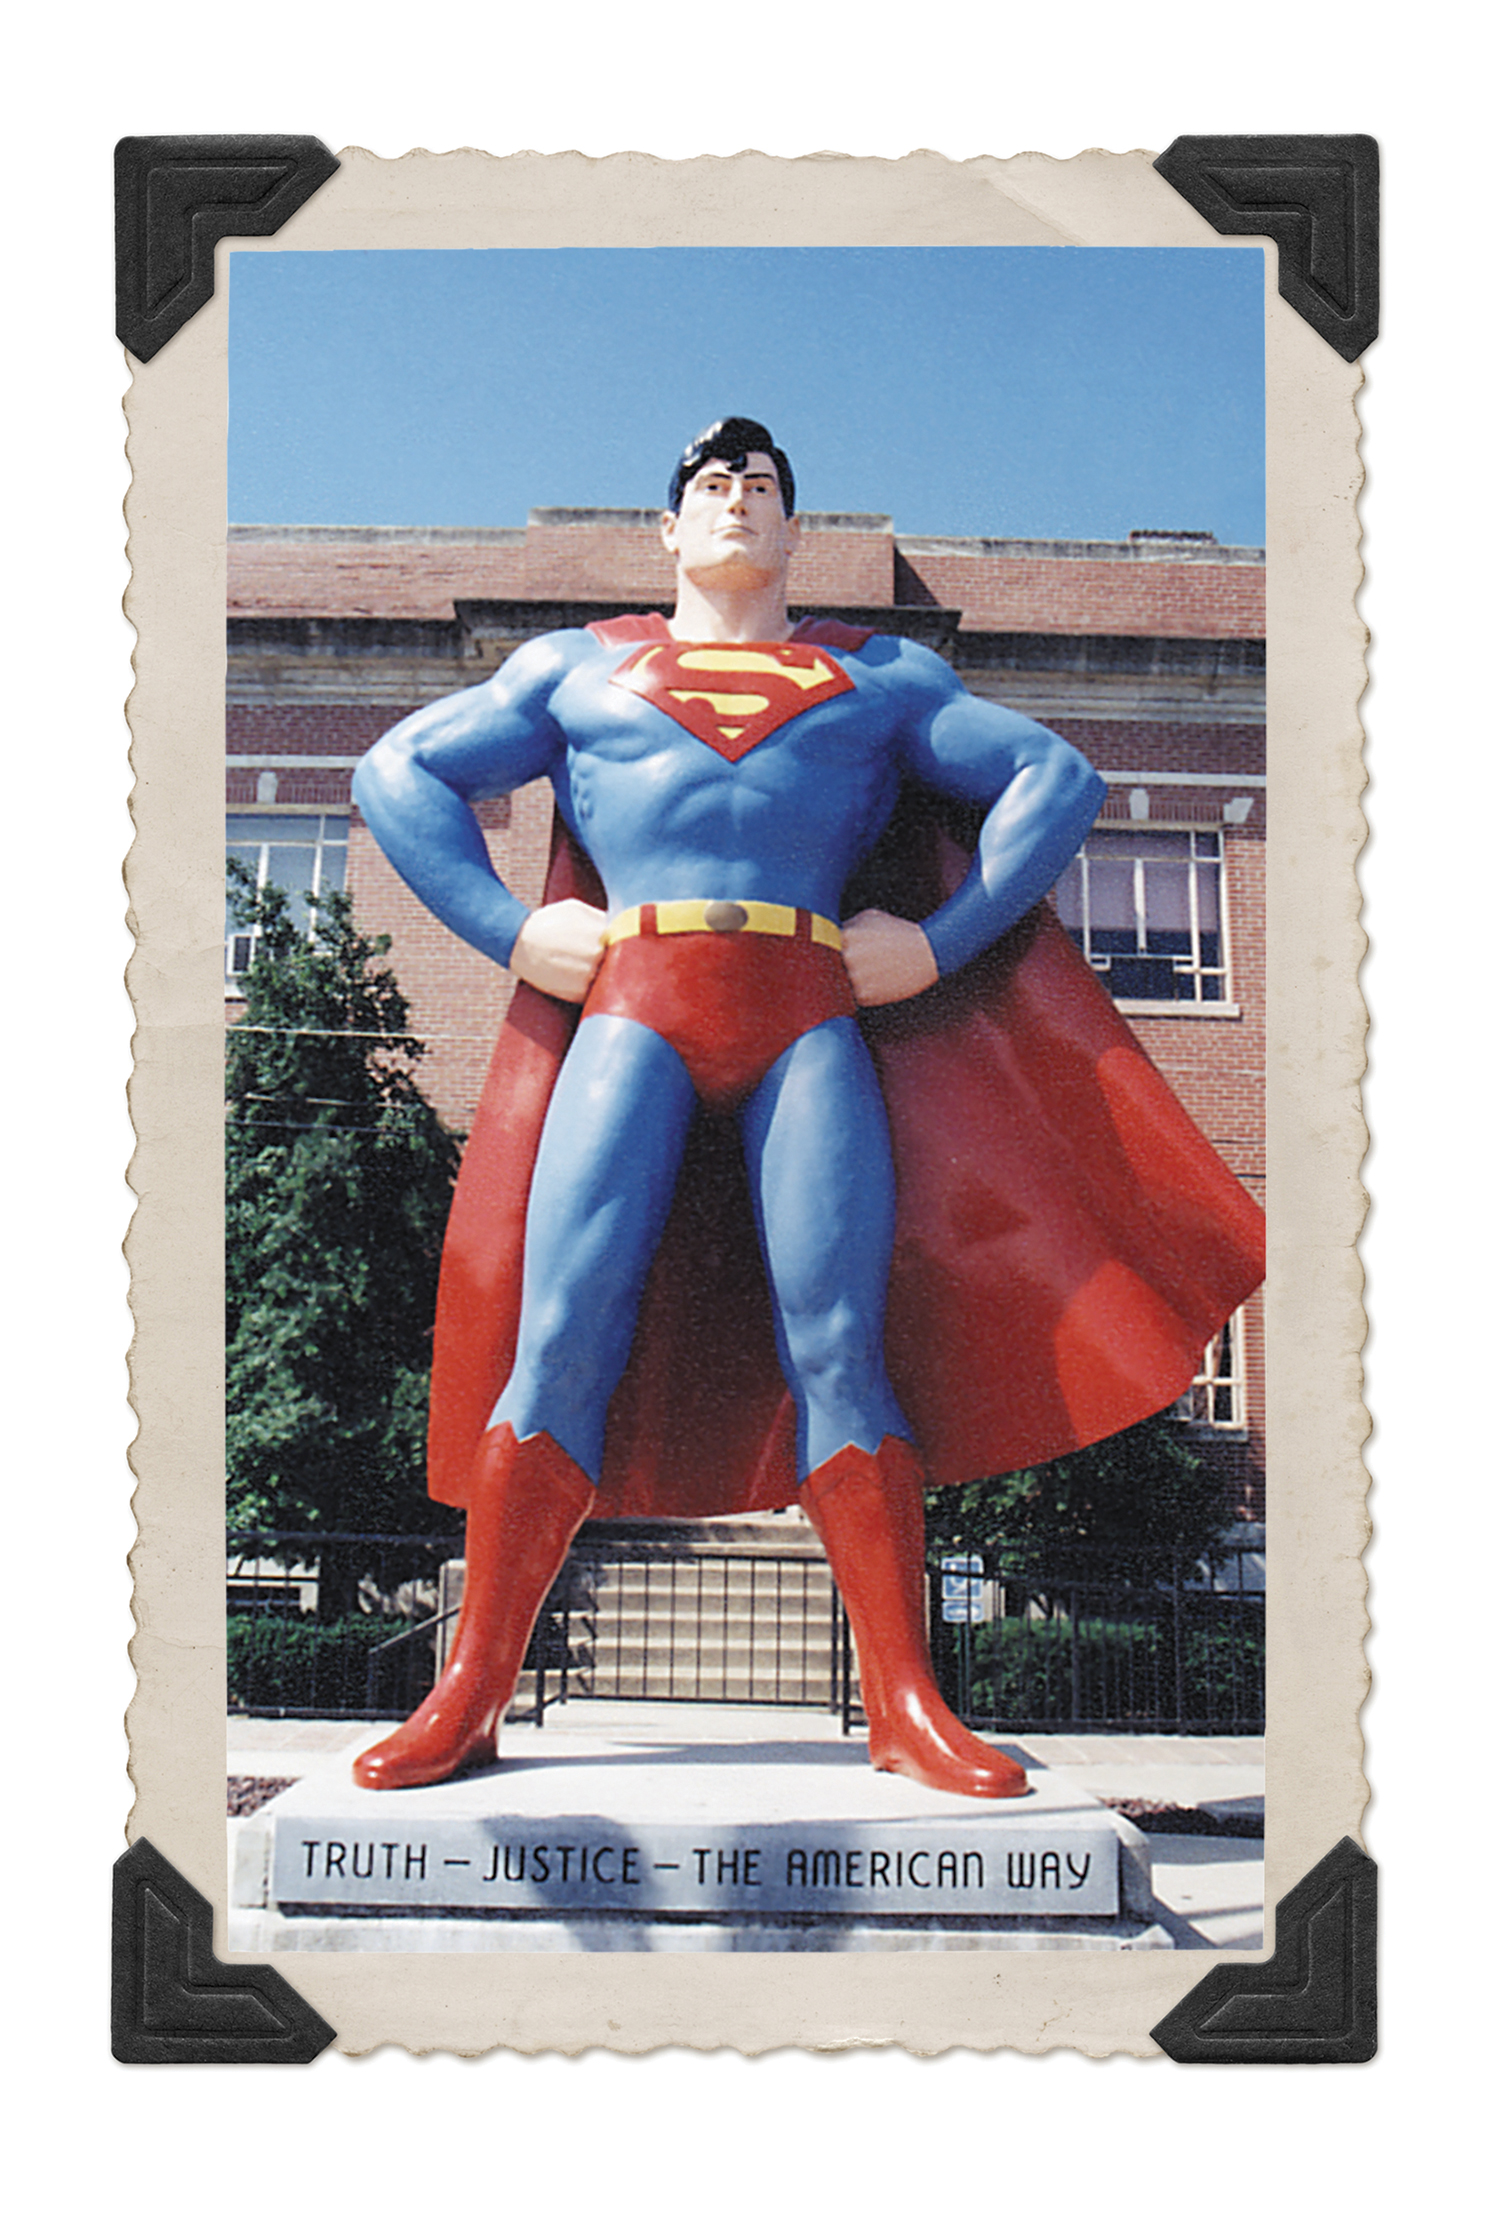 Superman statue in Metropolis, Illinois